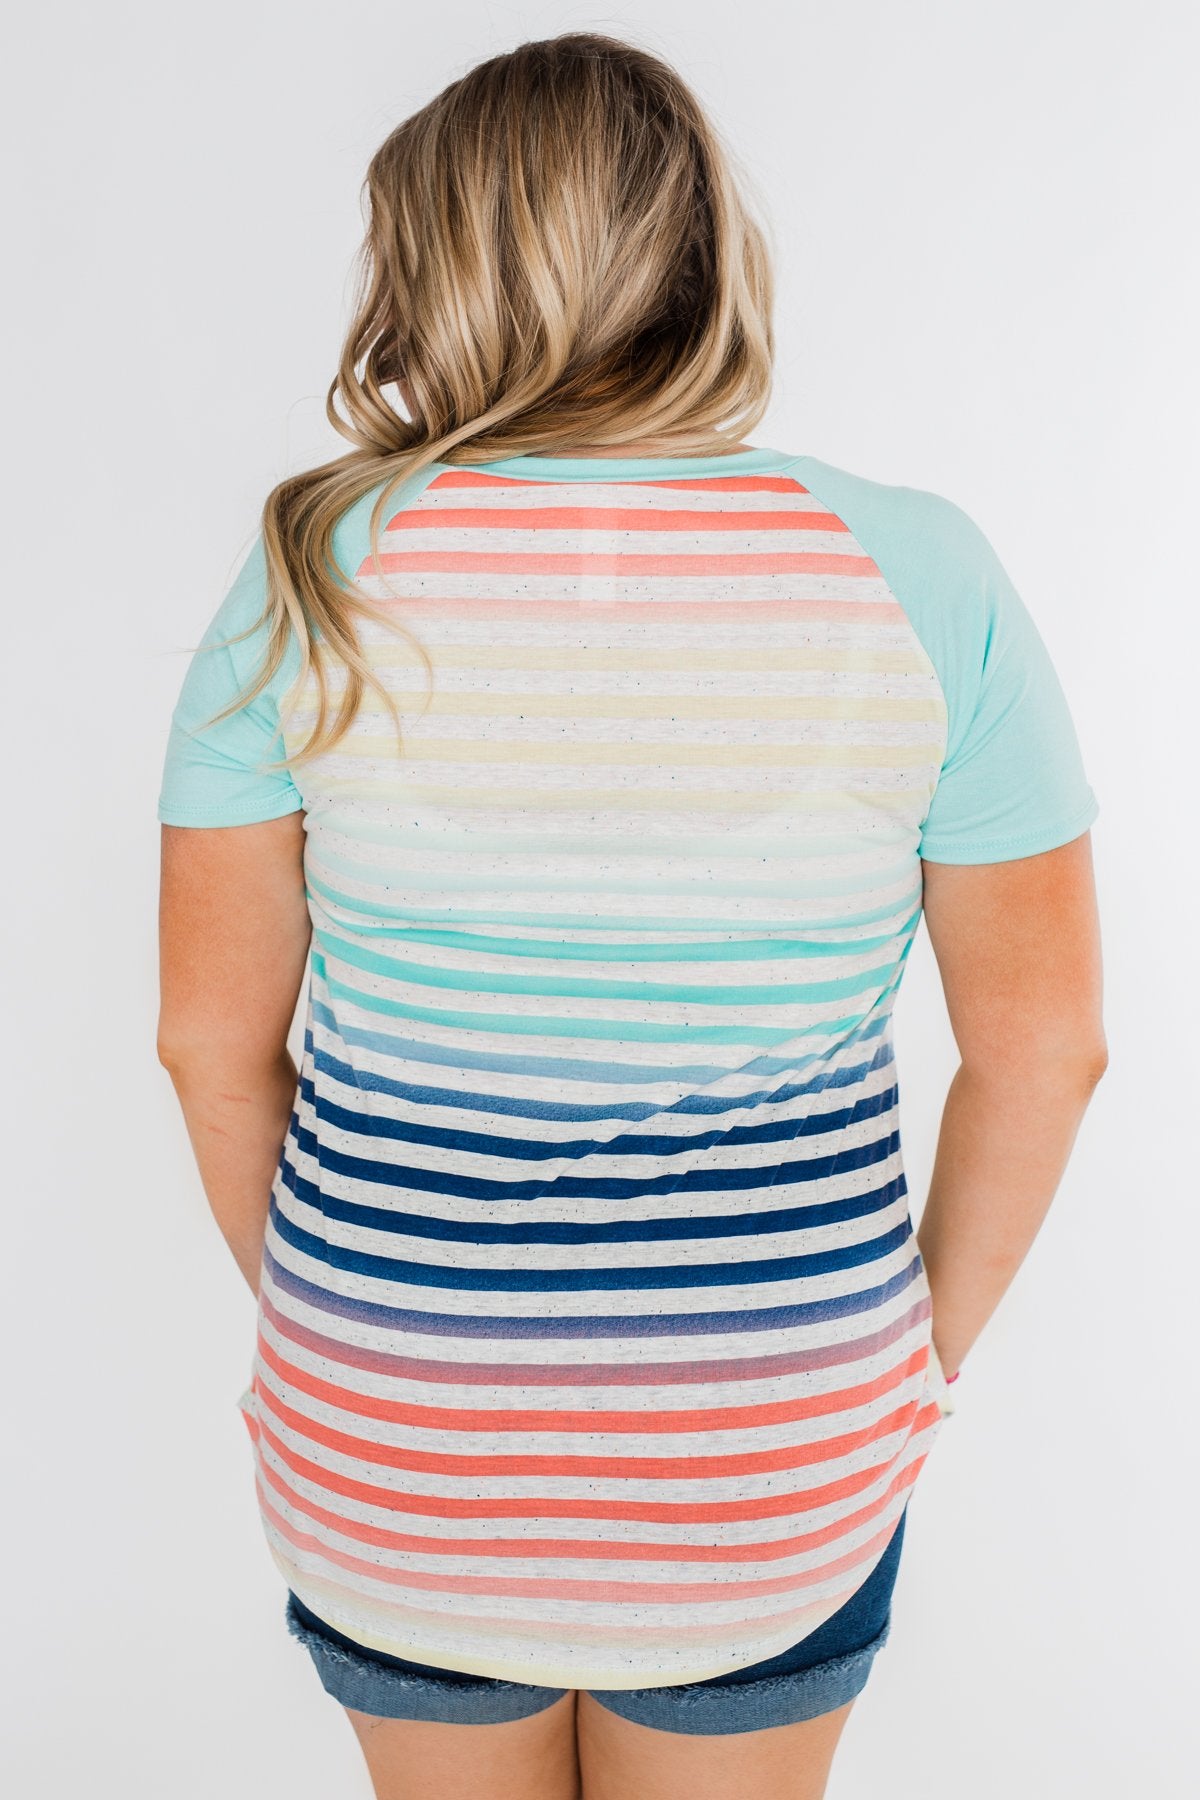 Summer Horizon Multi-Colored Striped Top- Light Blue